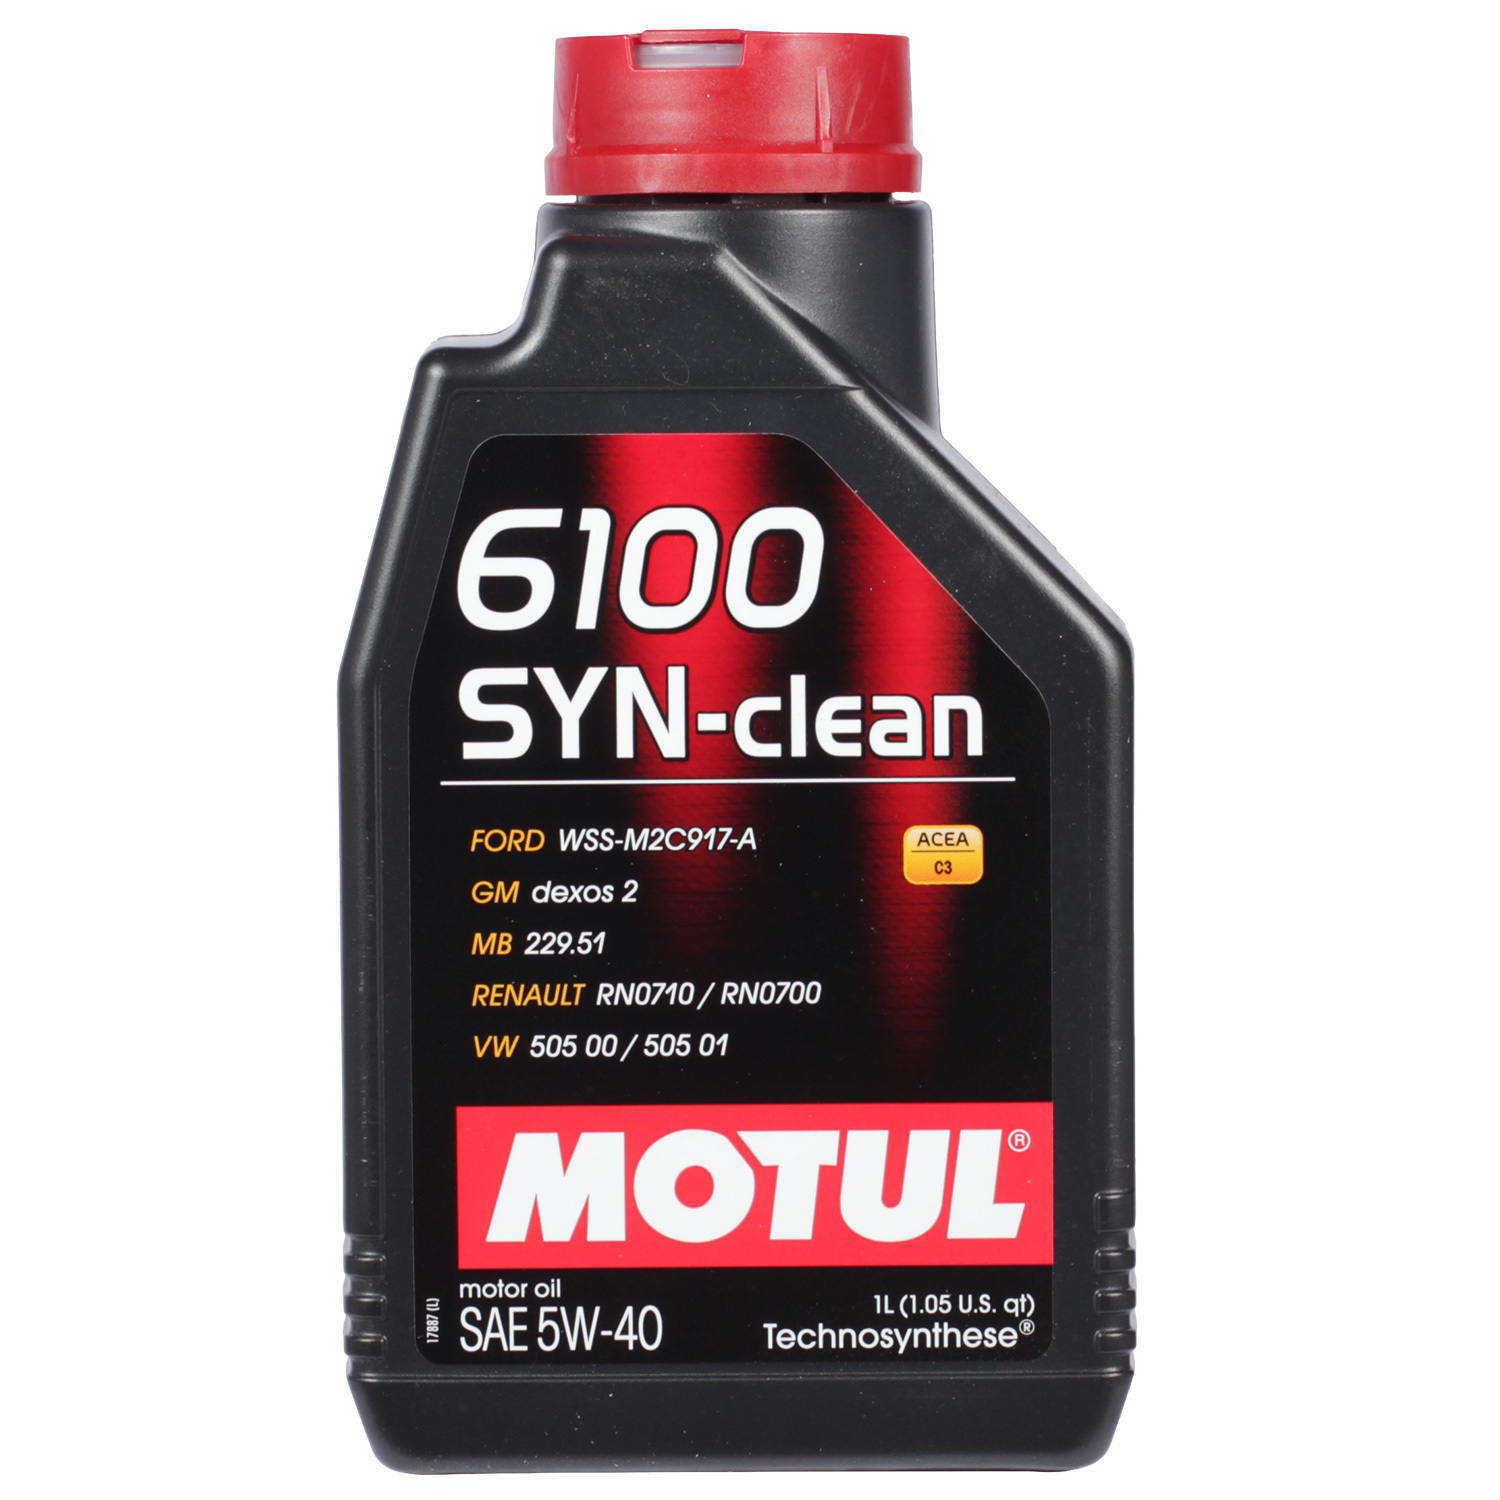 Motul Моторное масло Motul 6100 SYN-CLEAN 5W-40, 1 л motul моторное масло motul 6100 synclean 5w 30 1 л